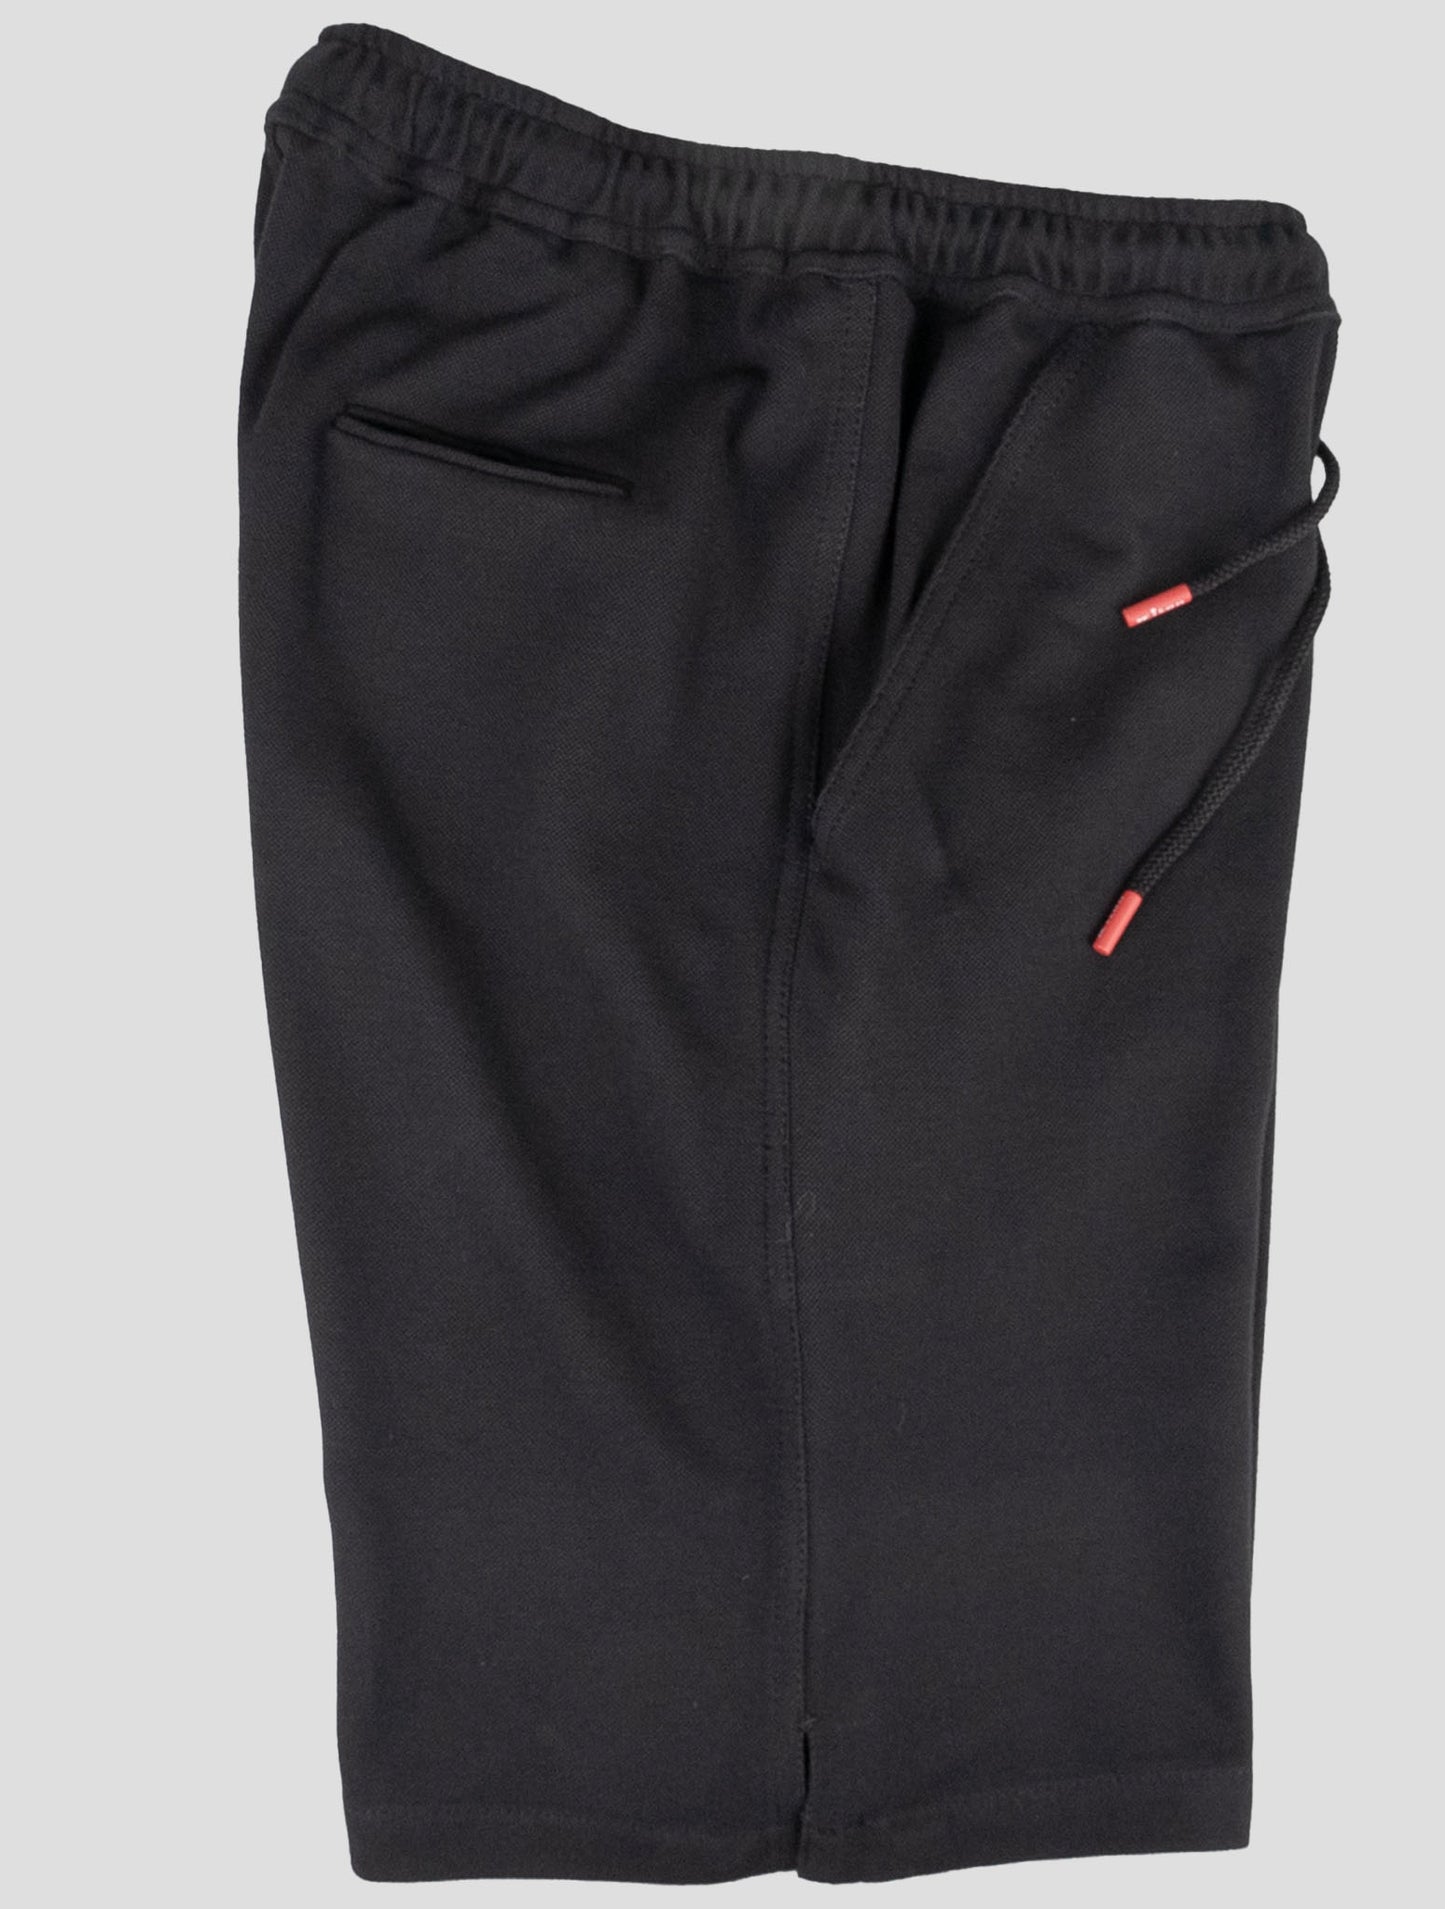 Kiton Matching Outfit - Gray Umbi and Black Short Pants Tracksuit